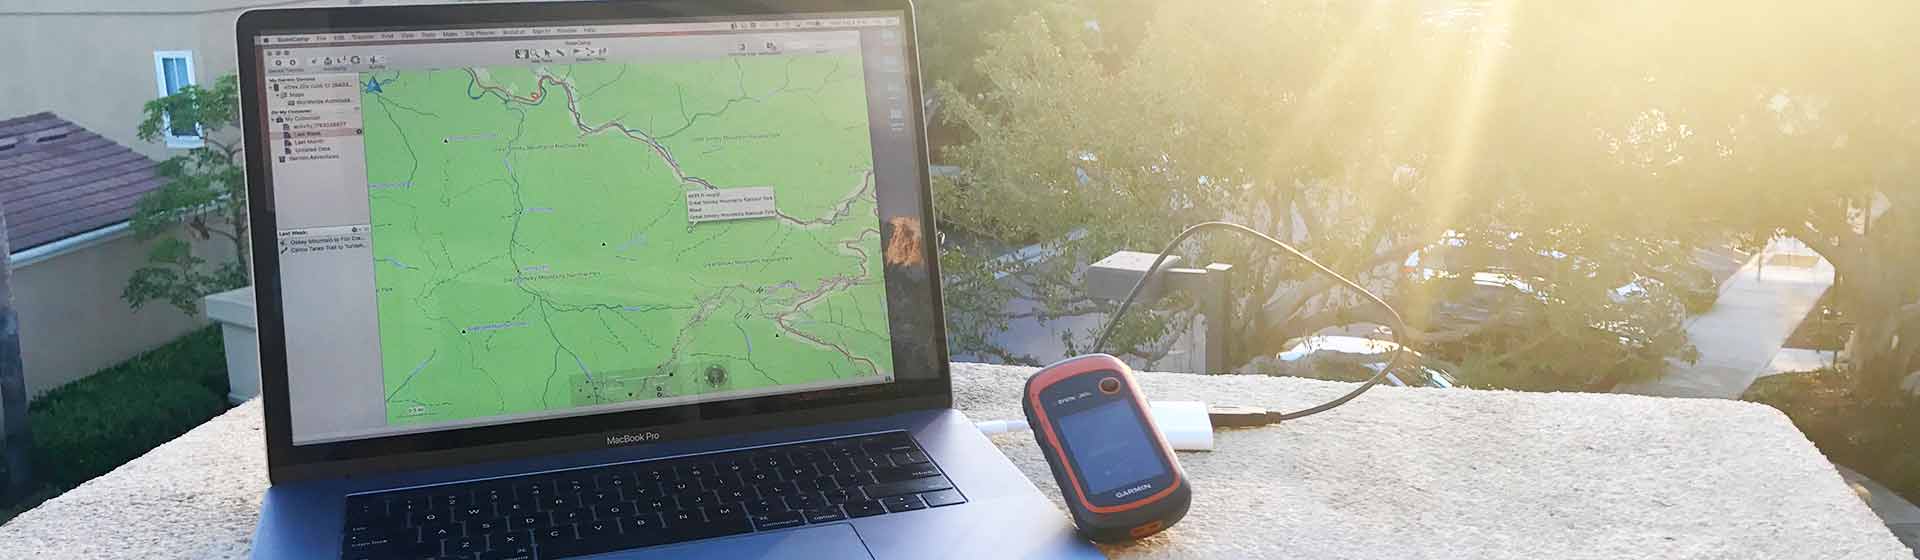 slette Slikke Sindsro How To Get Free Garmin GPS Maps For Hiking - HikingGuy.com